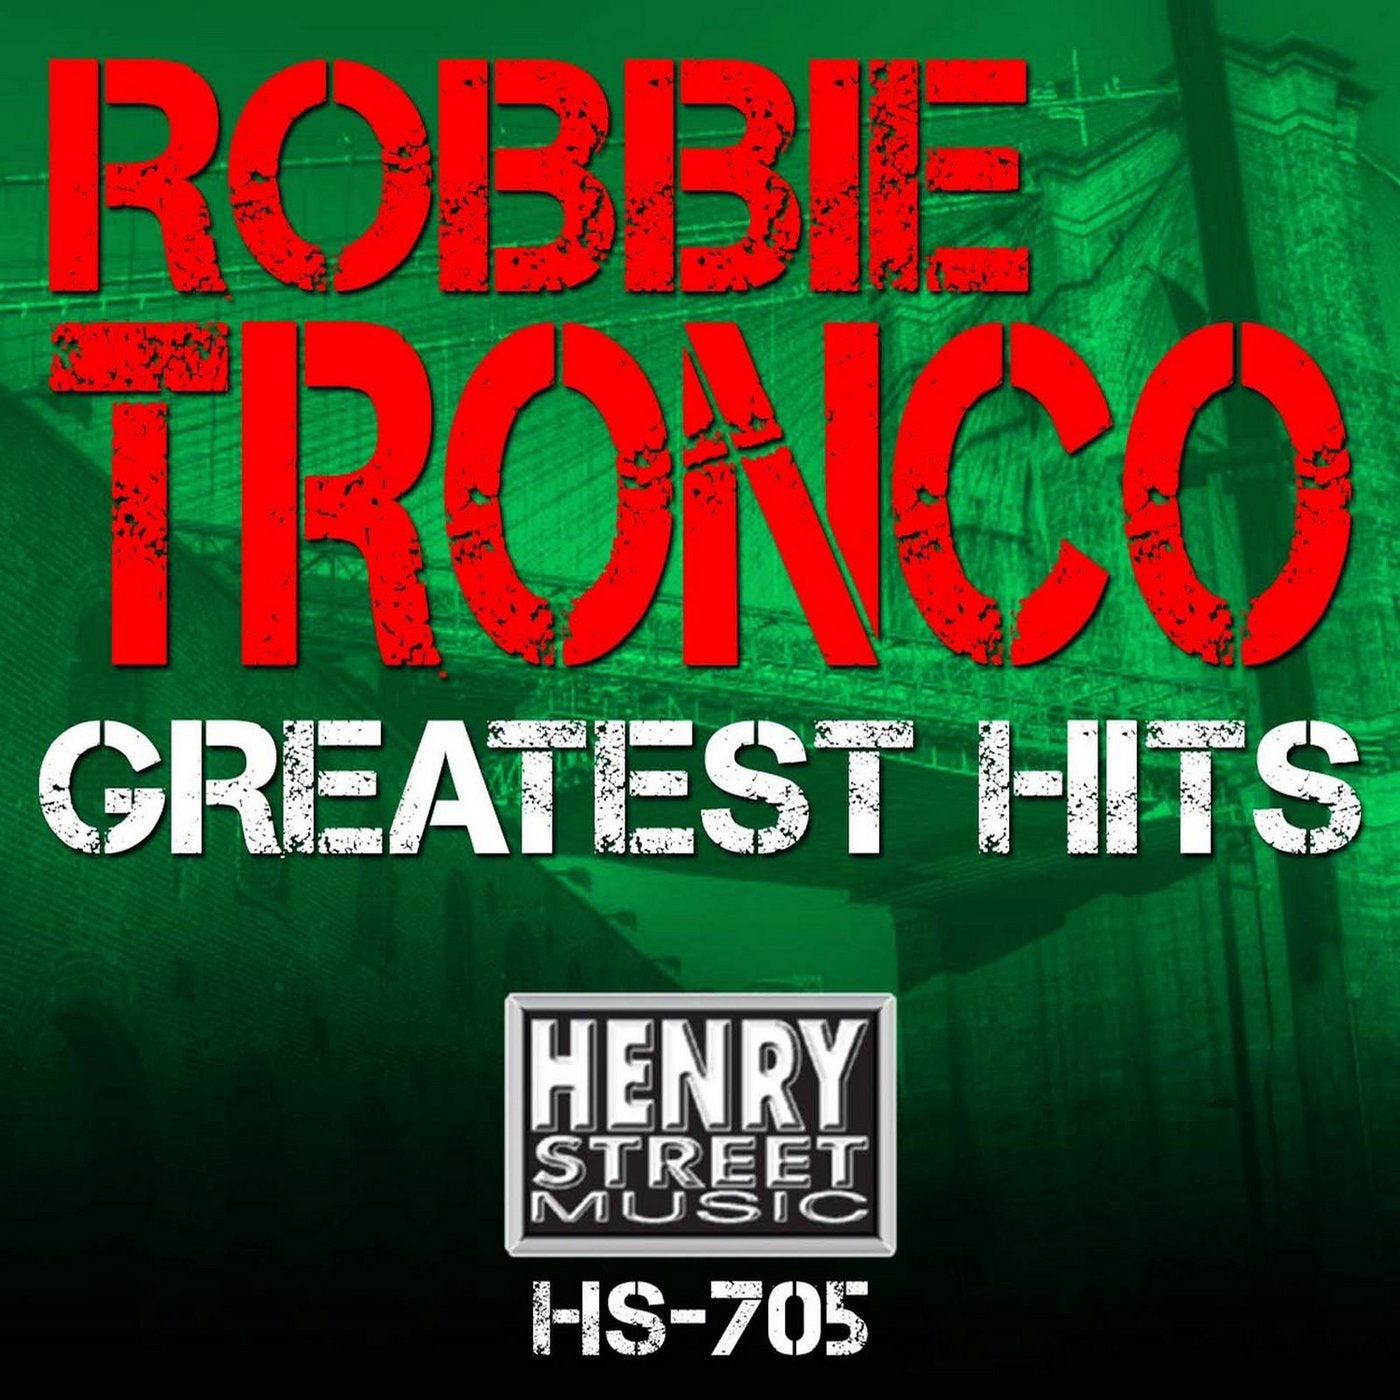 Robbie Tronco Greatest Hits